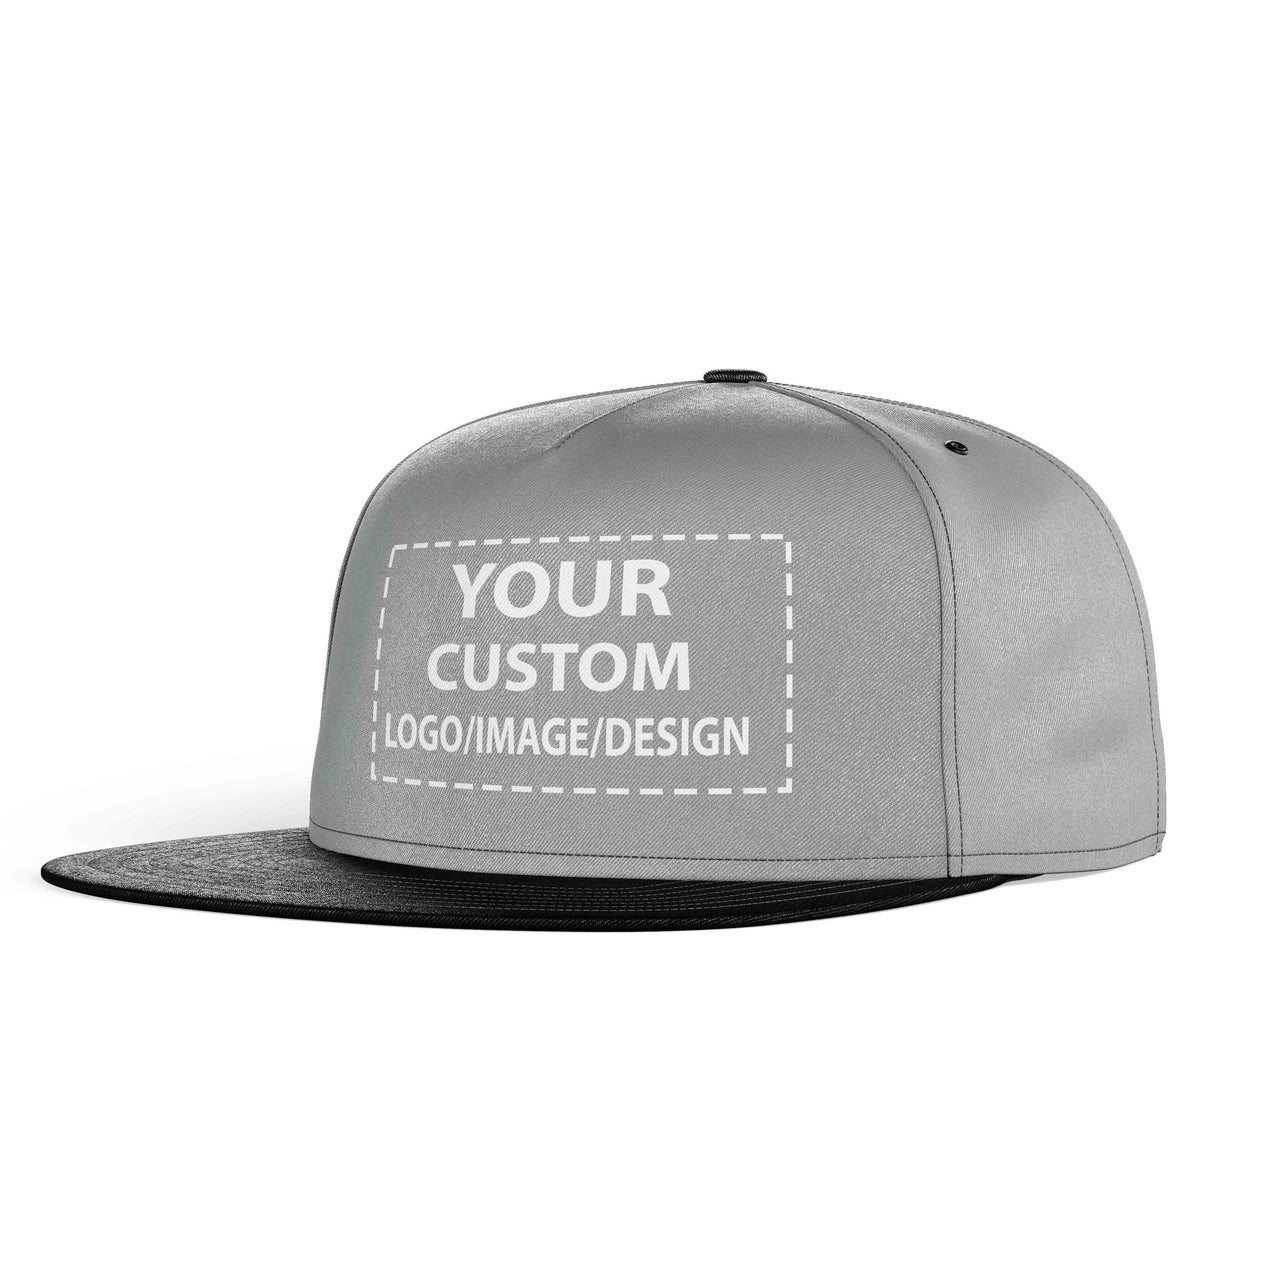 Custom Logo/Design/Image Designed Snapback Caps & Hats